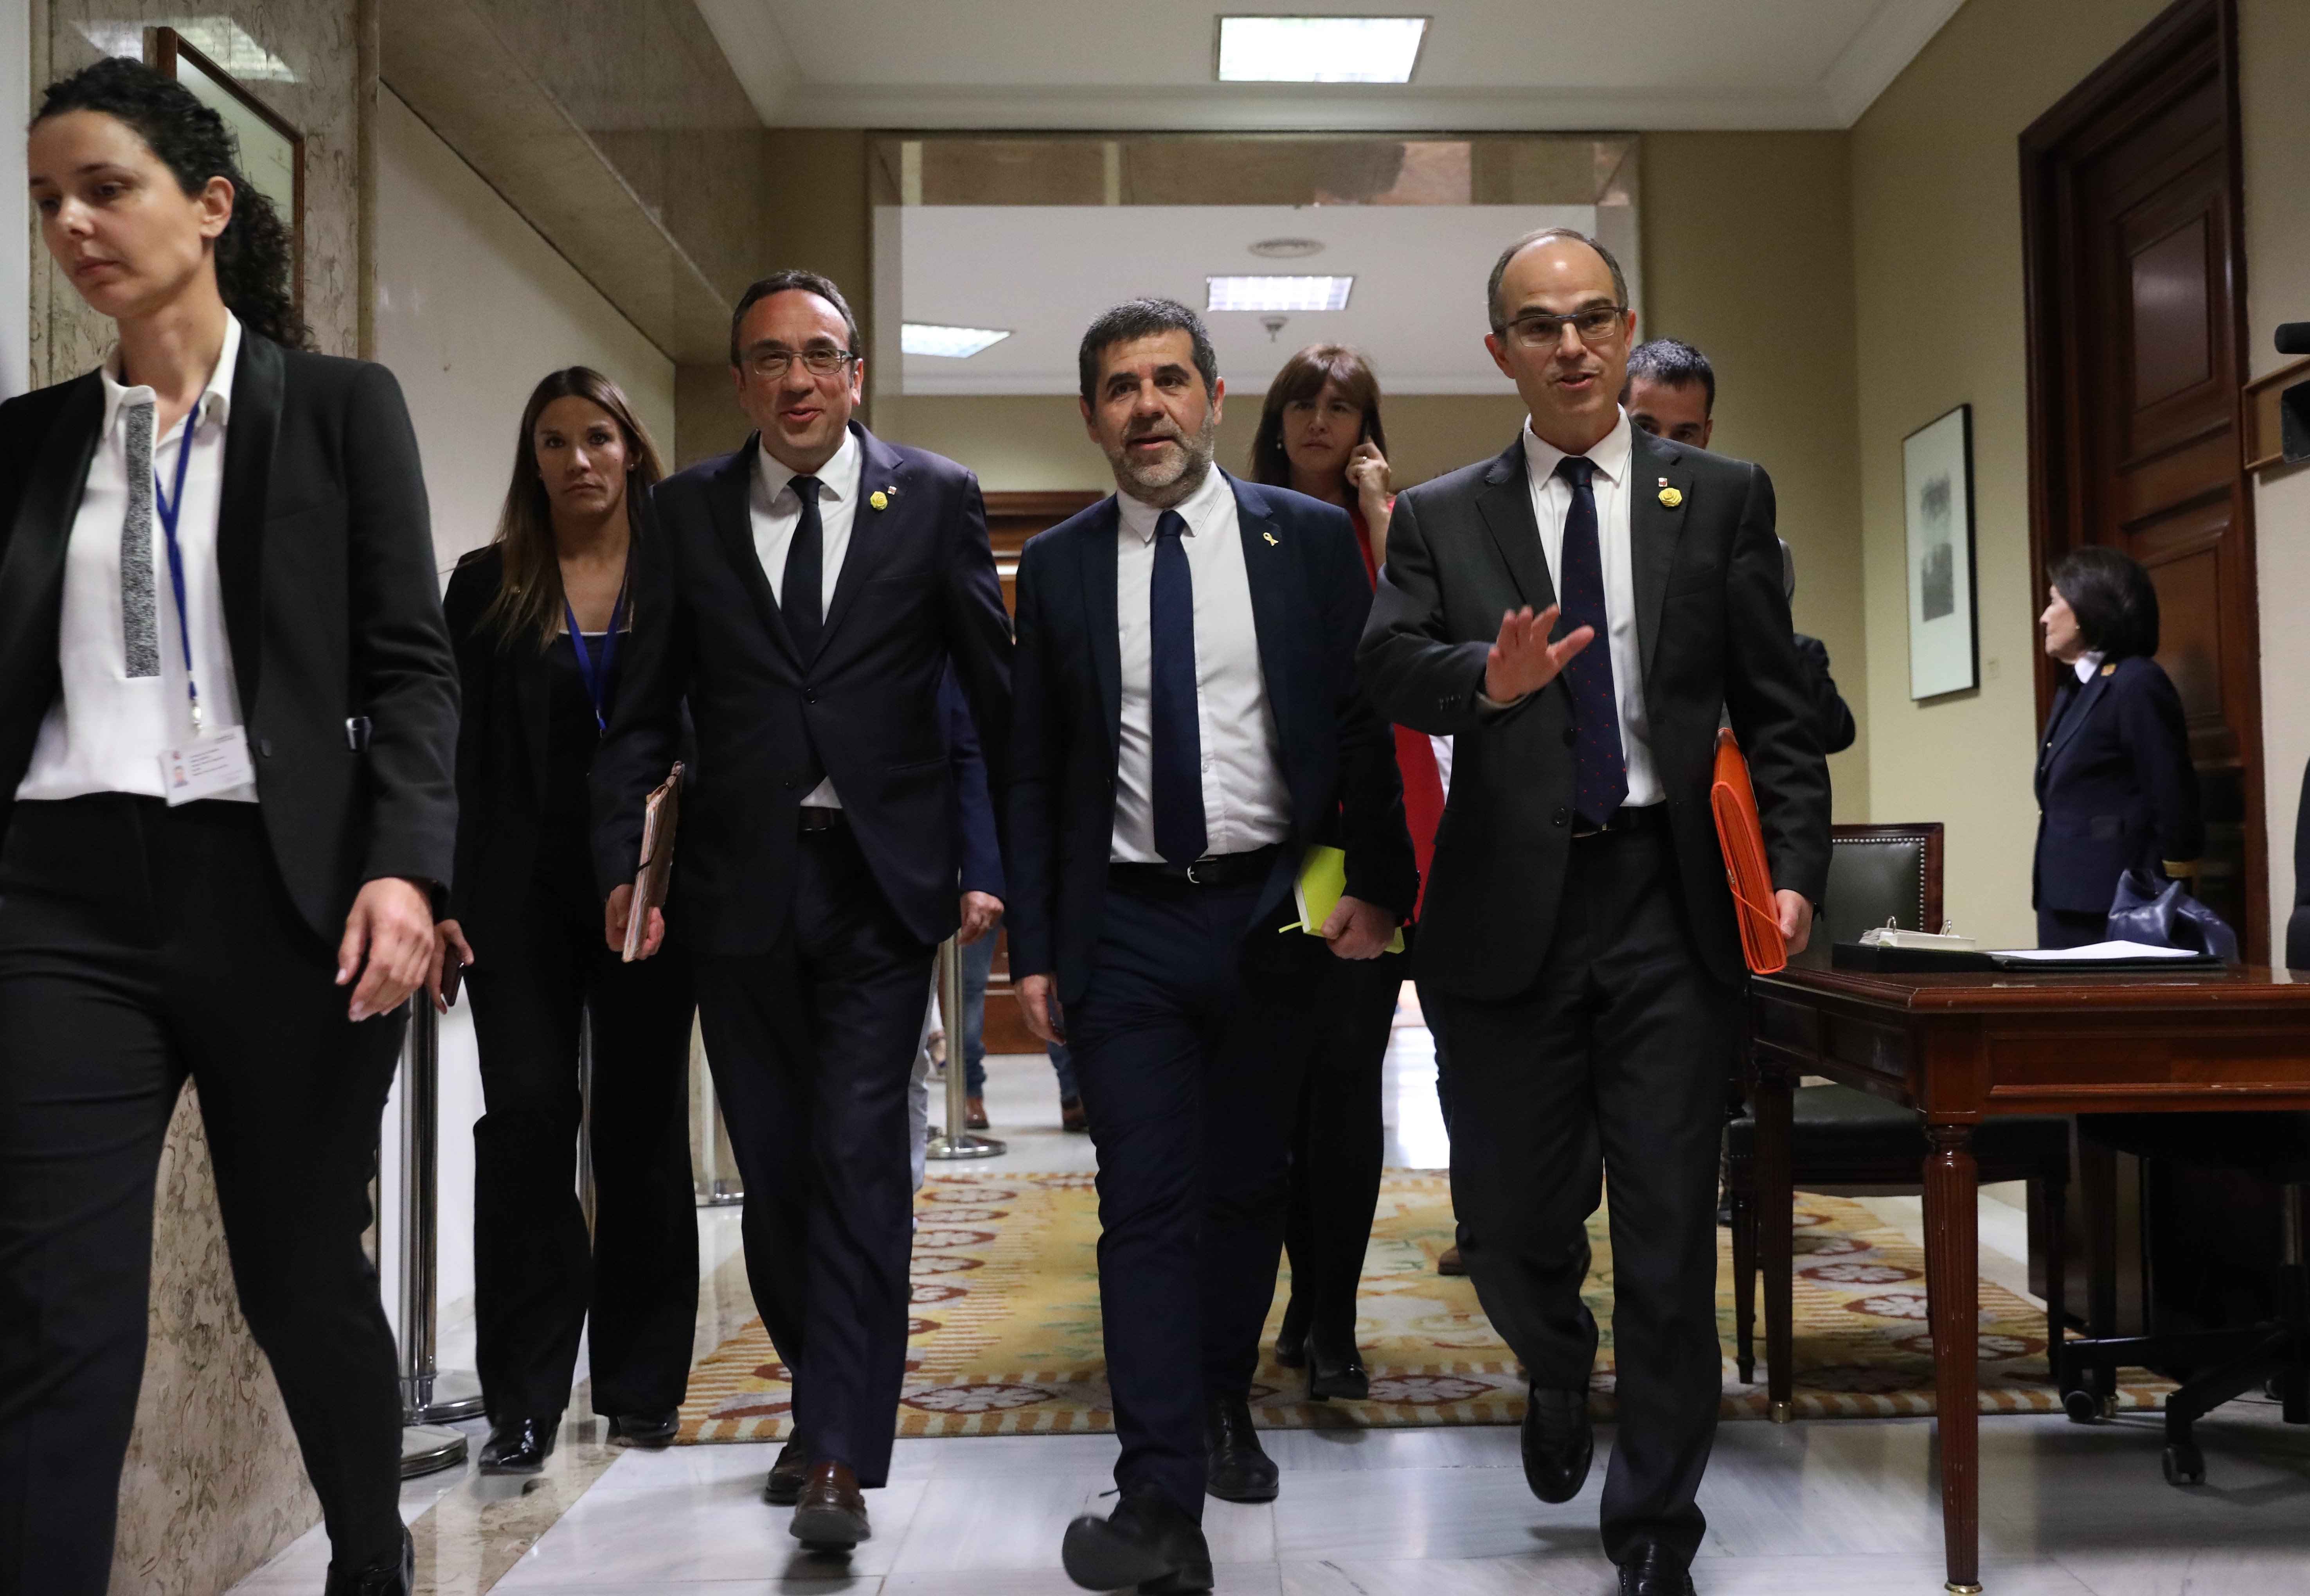 Three jailed Catalan leaders demand release based on Puig ruling in Belgium